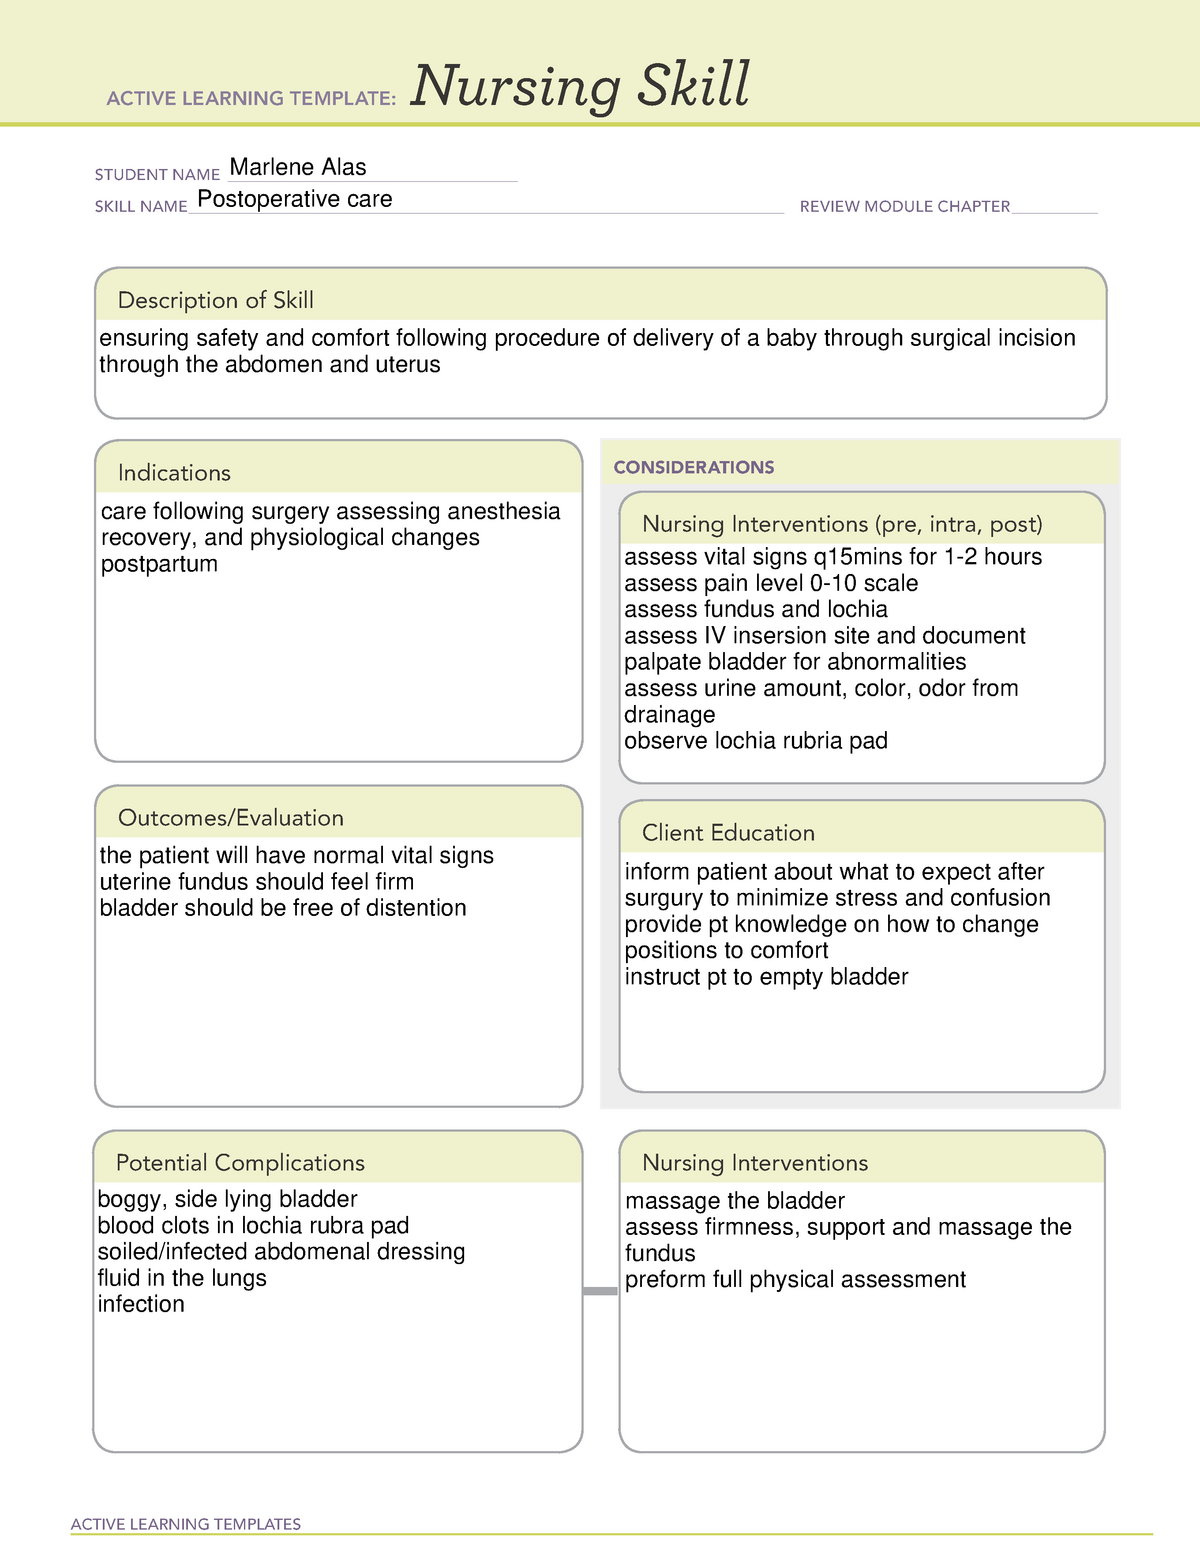 ati-nursing-skill-skin-assessment-active-learning-templates-vrogue